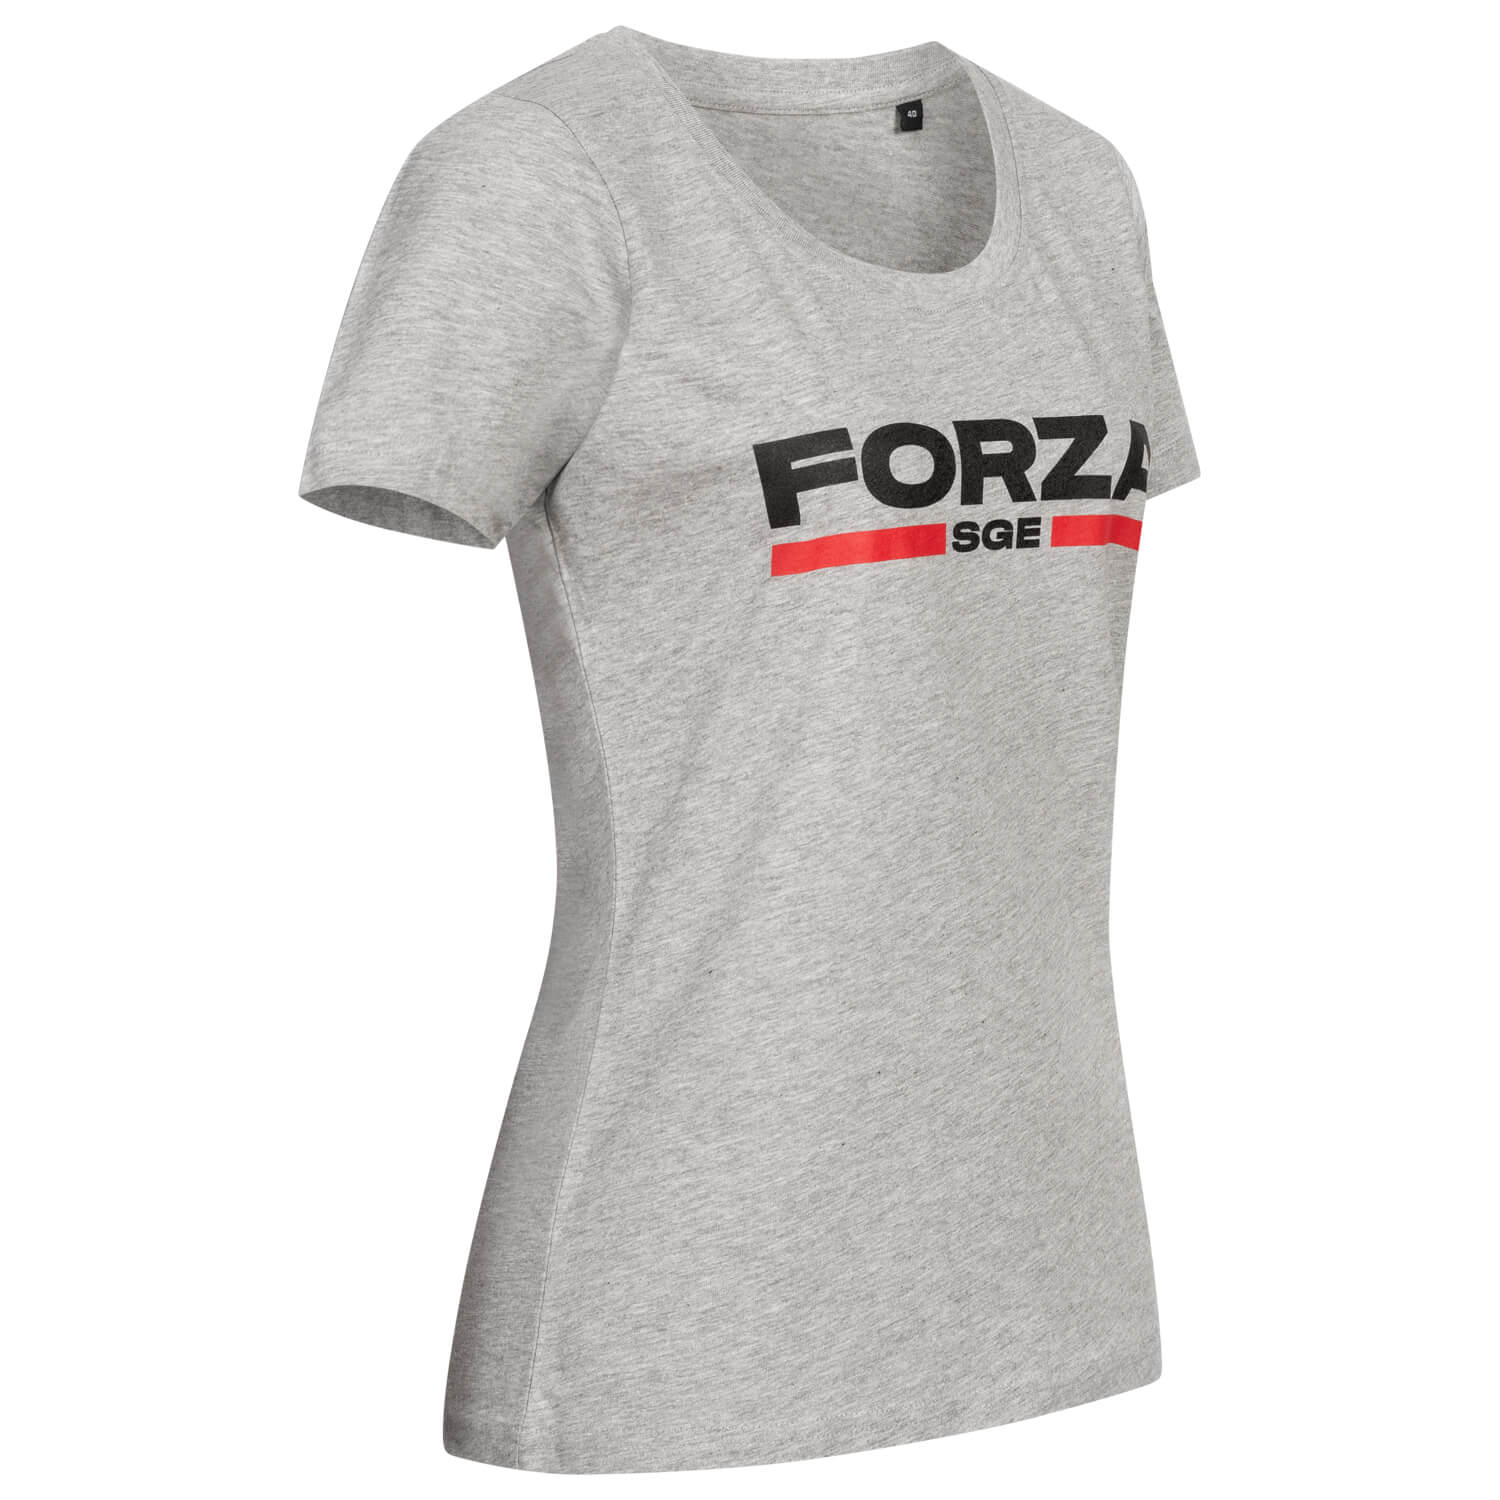 Bild 4: Damen T-Shirt Forza SGE